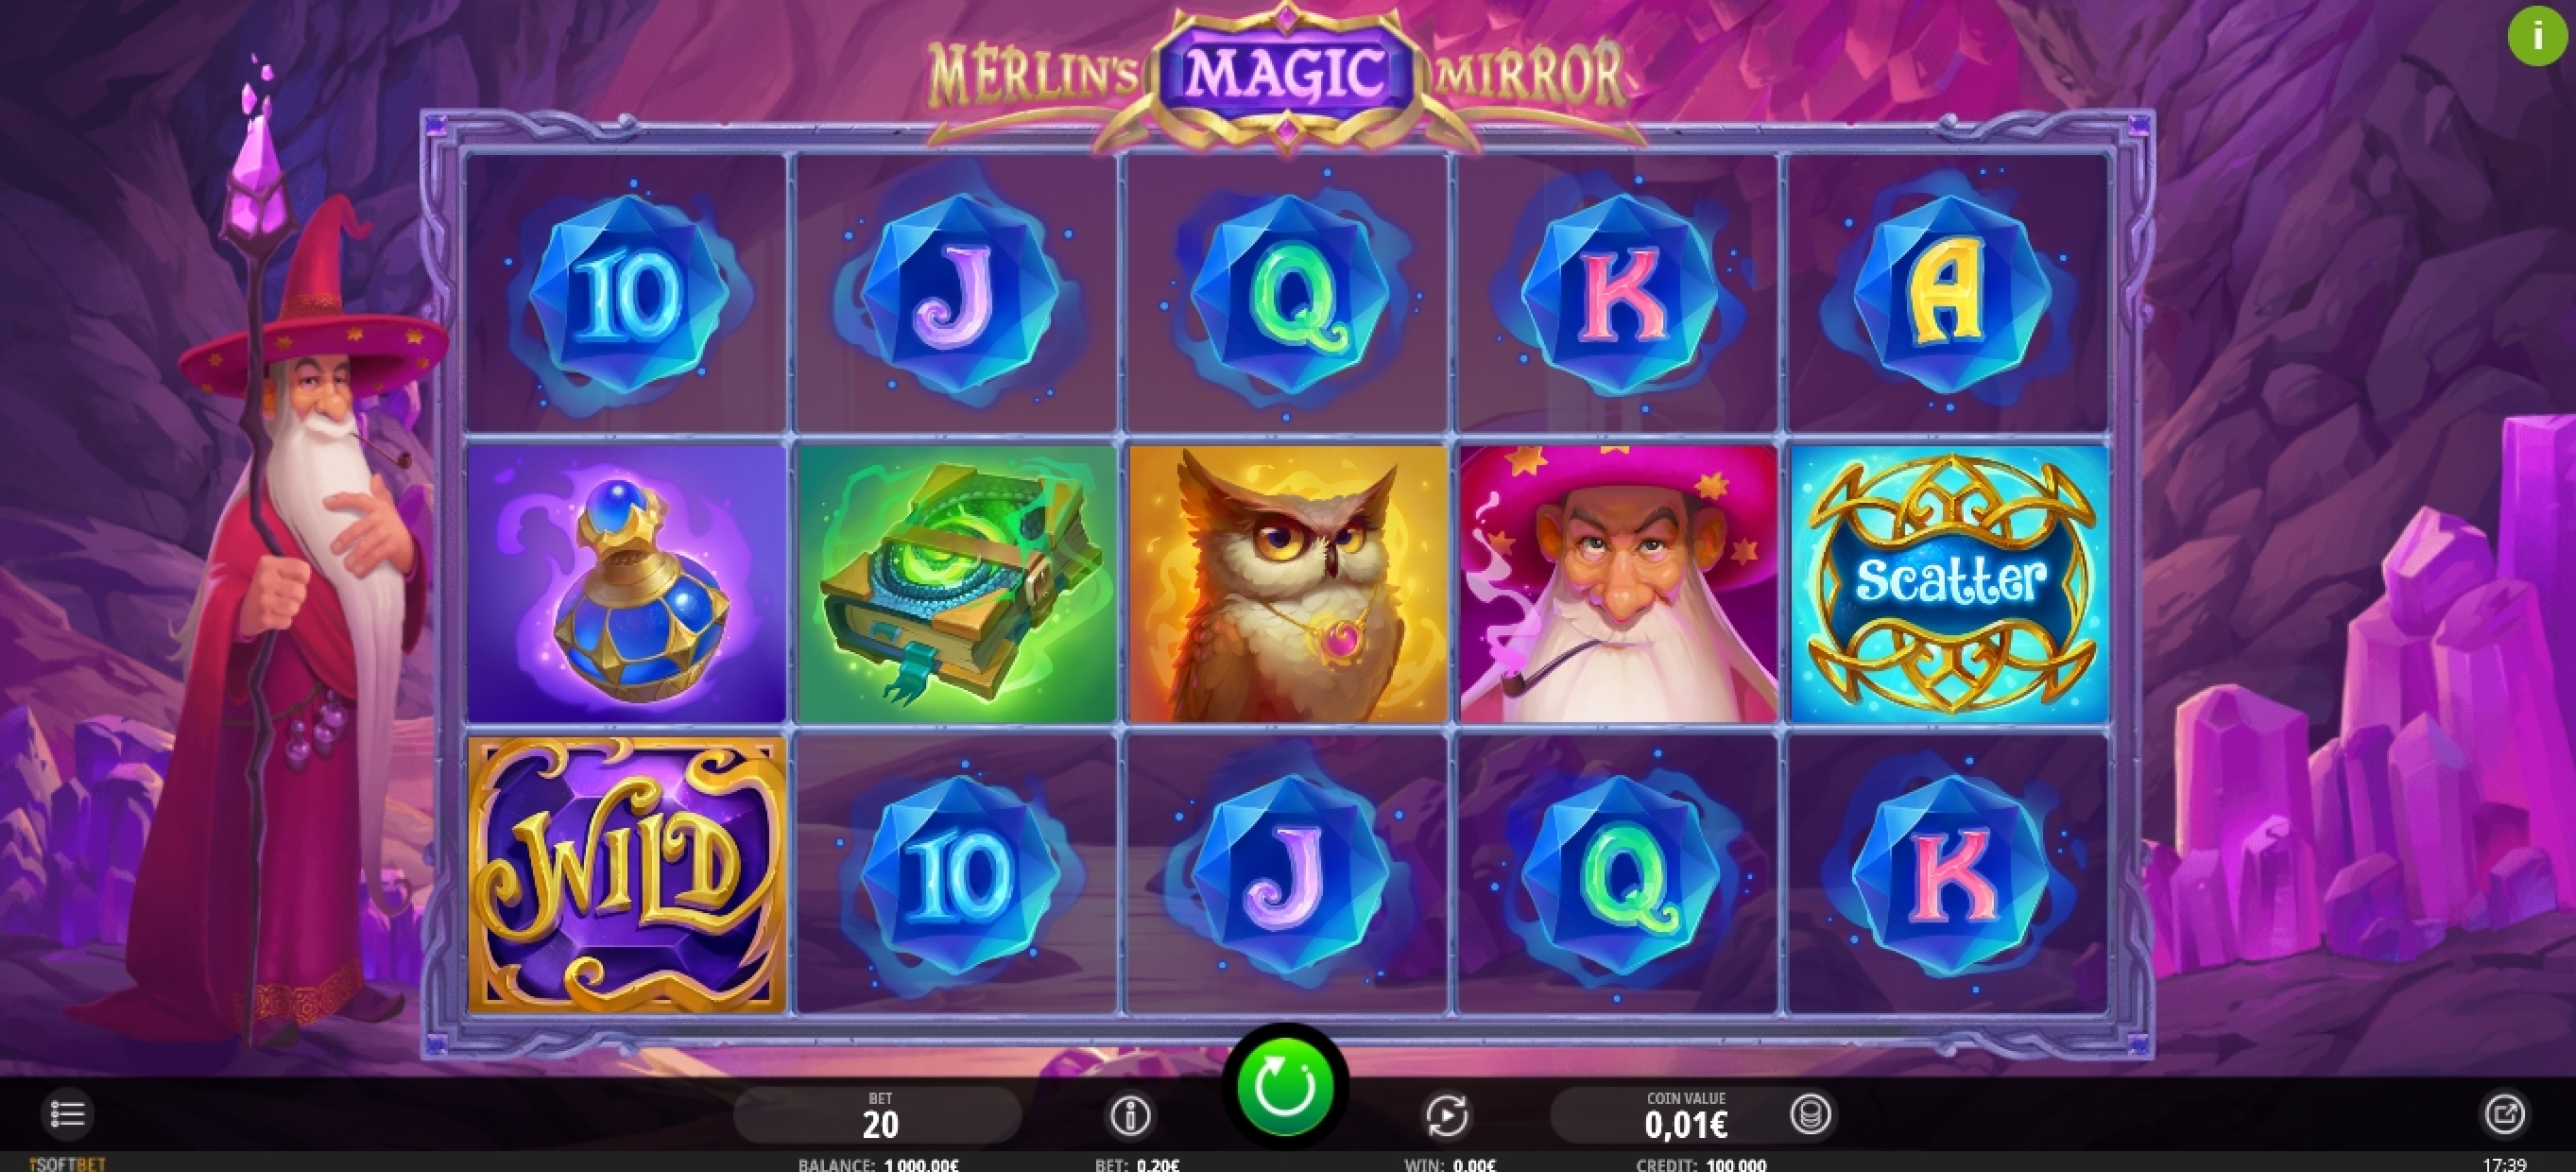 Reels in Merlin's Magic Mirror Slot Game by iSoftBet